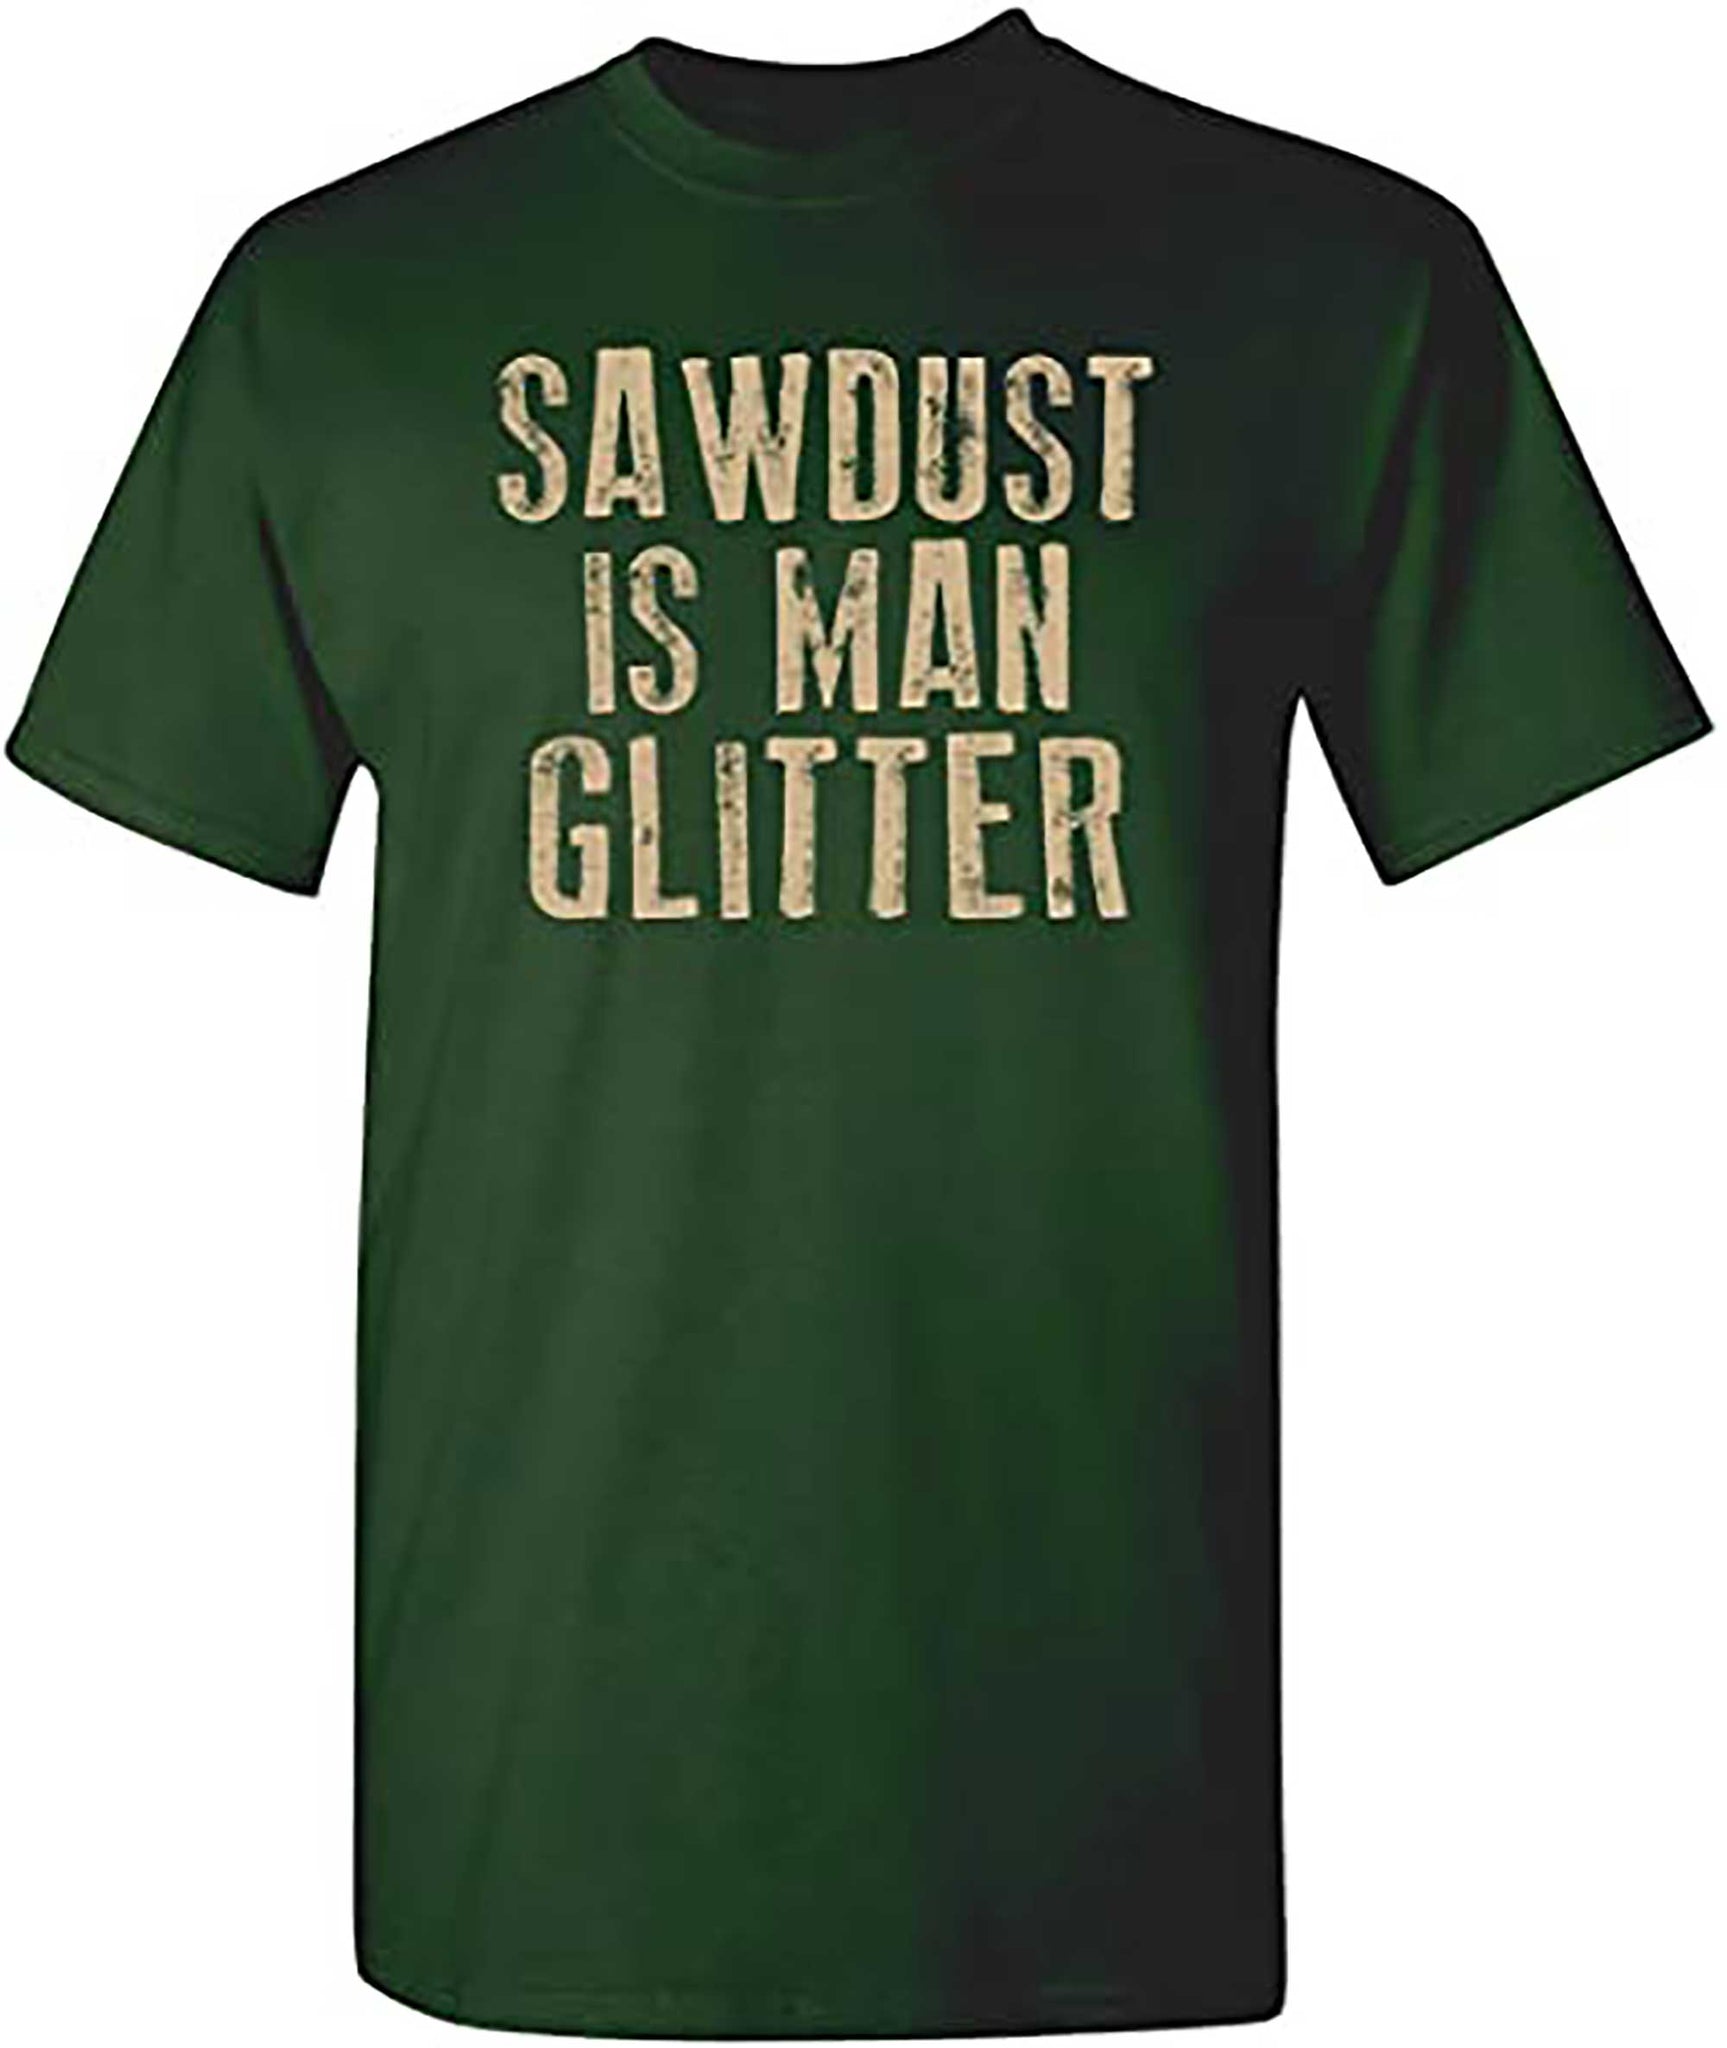 Skitongift Sawdust is Man Glitter Graphic Novelty Sarcastic Funny T Shirt